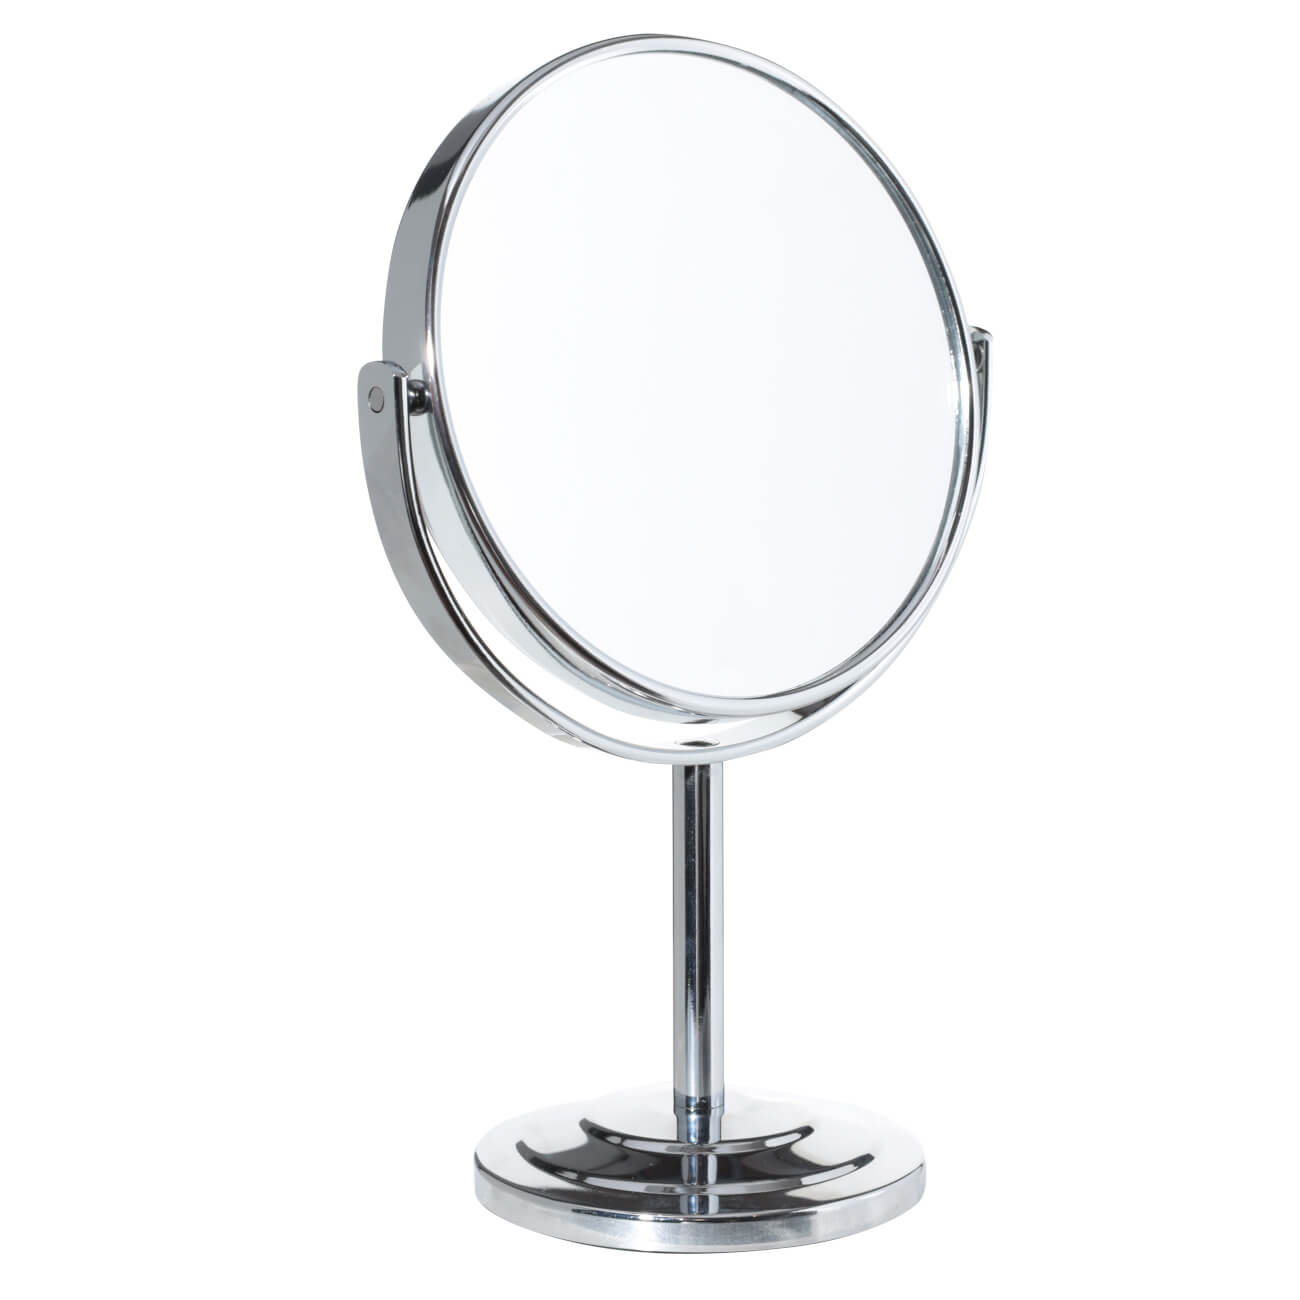 зеркало настольное 17 см двустороннее на ножке металл круглое fantastic Зеркало настольное, 22 см, двустороннее, на ножке, сталь, круглое, Fantastic